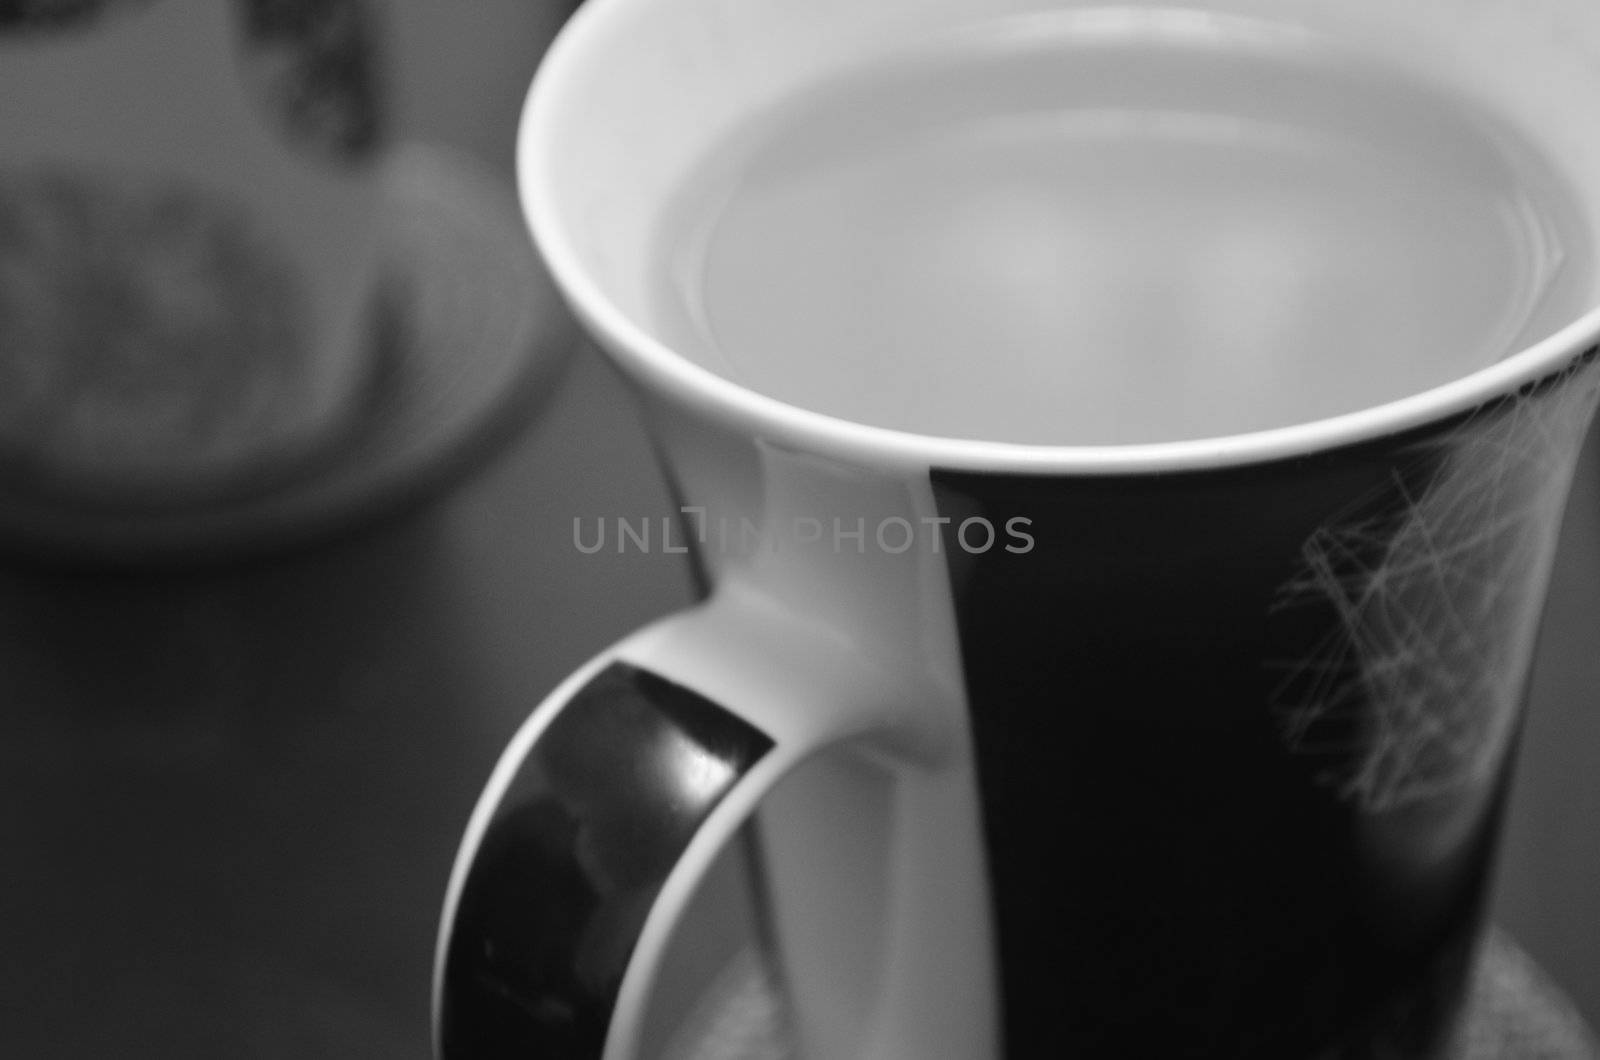 Monochrome close up of Mug containing hot beverage